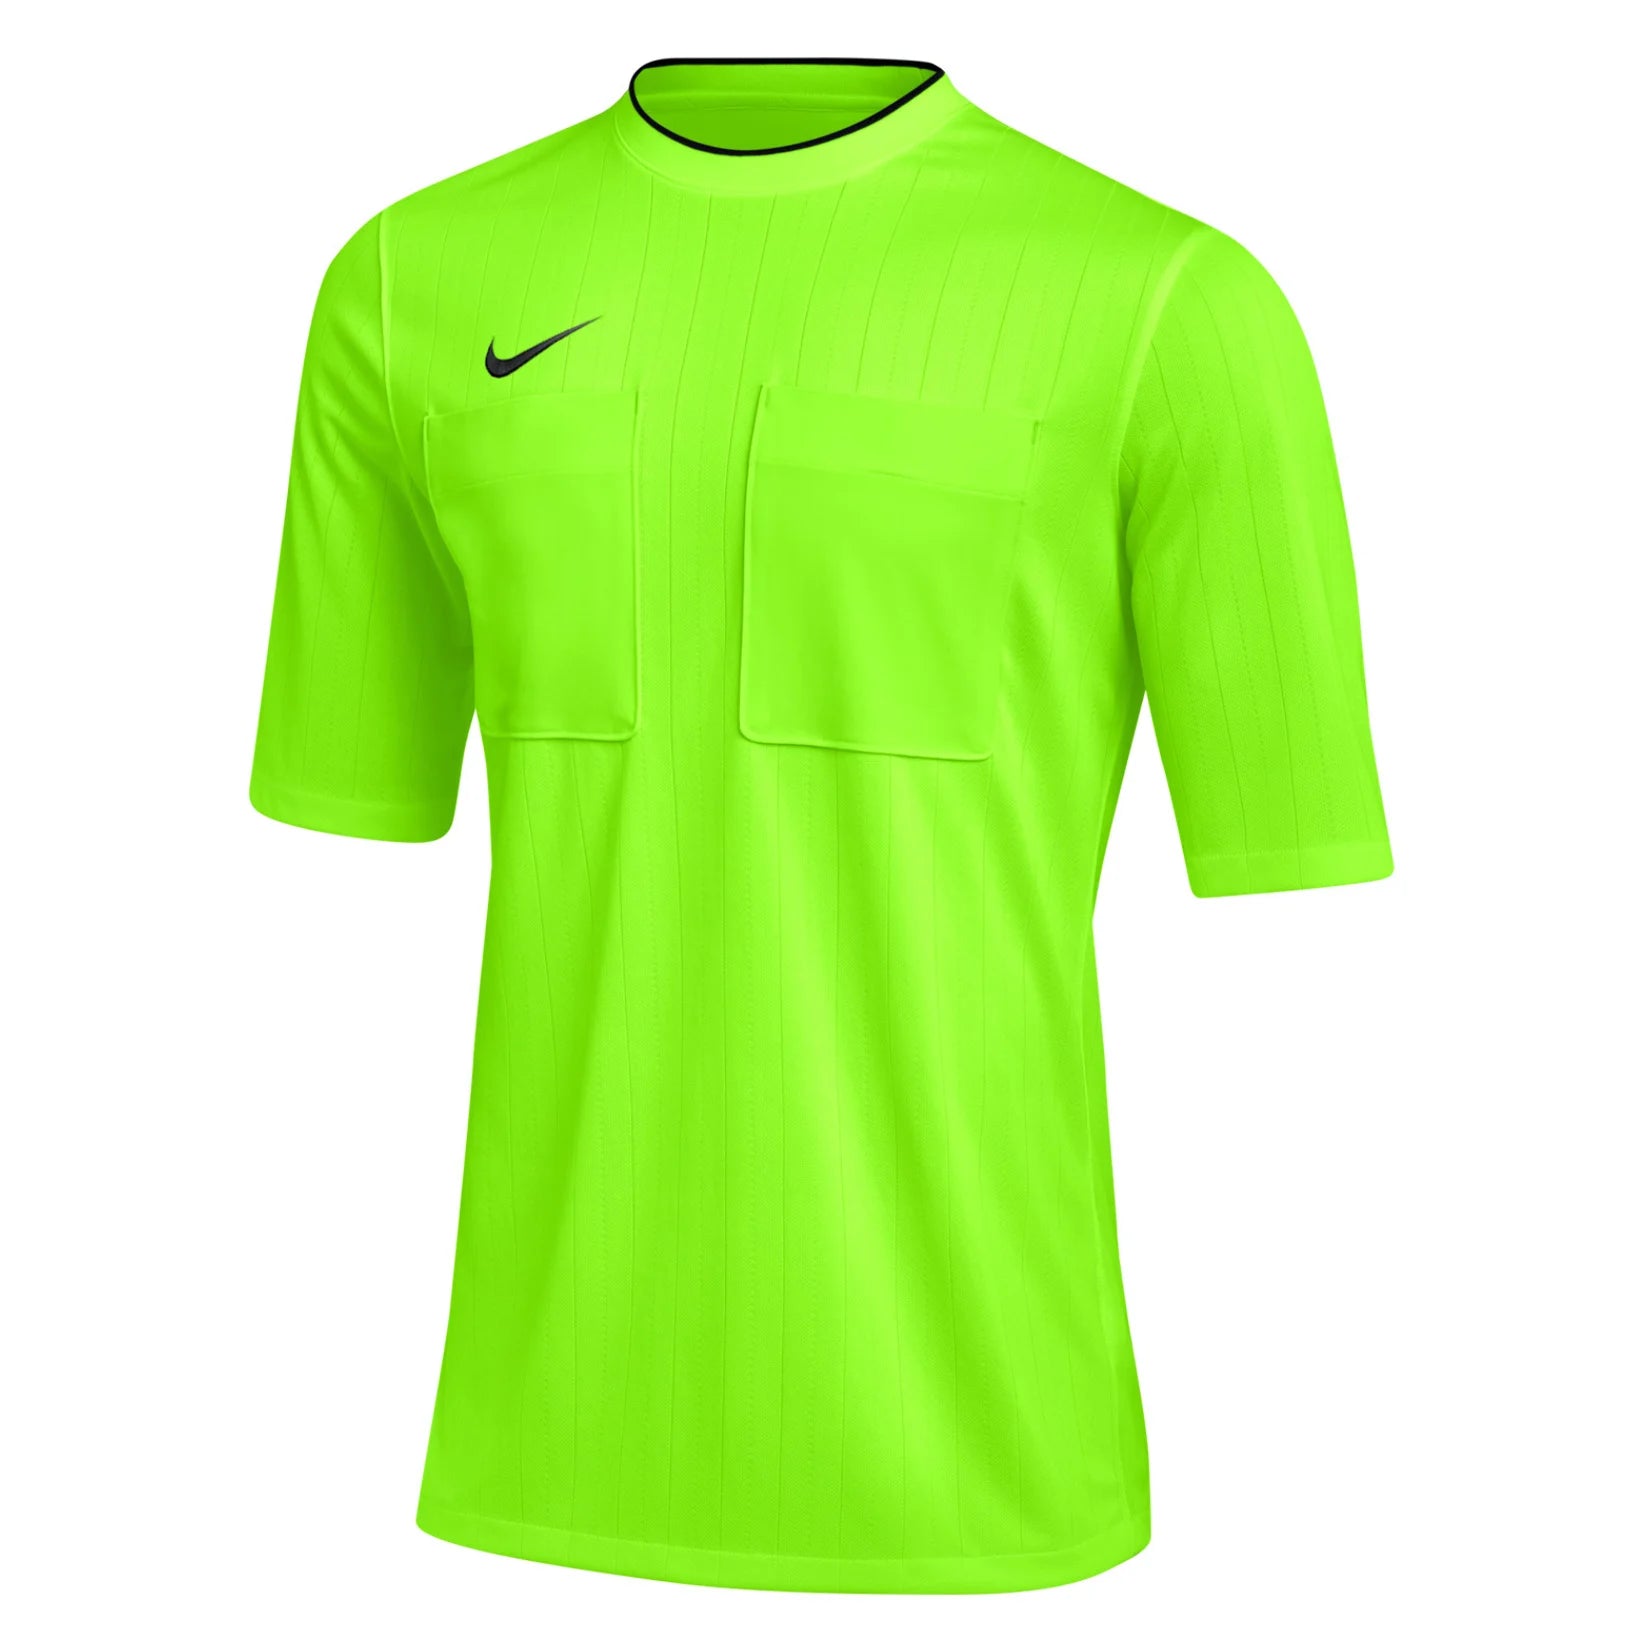 2022-26 Nike Referee Shirt S/S Volt - A&H International